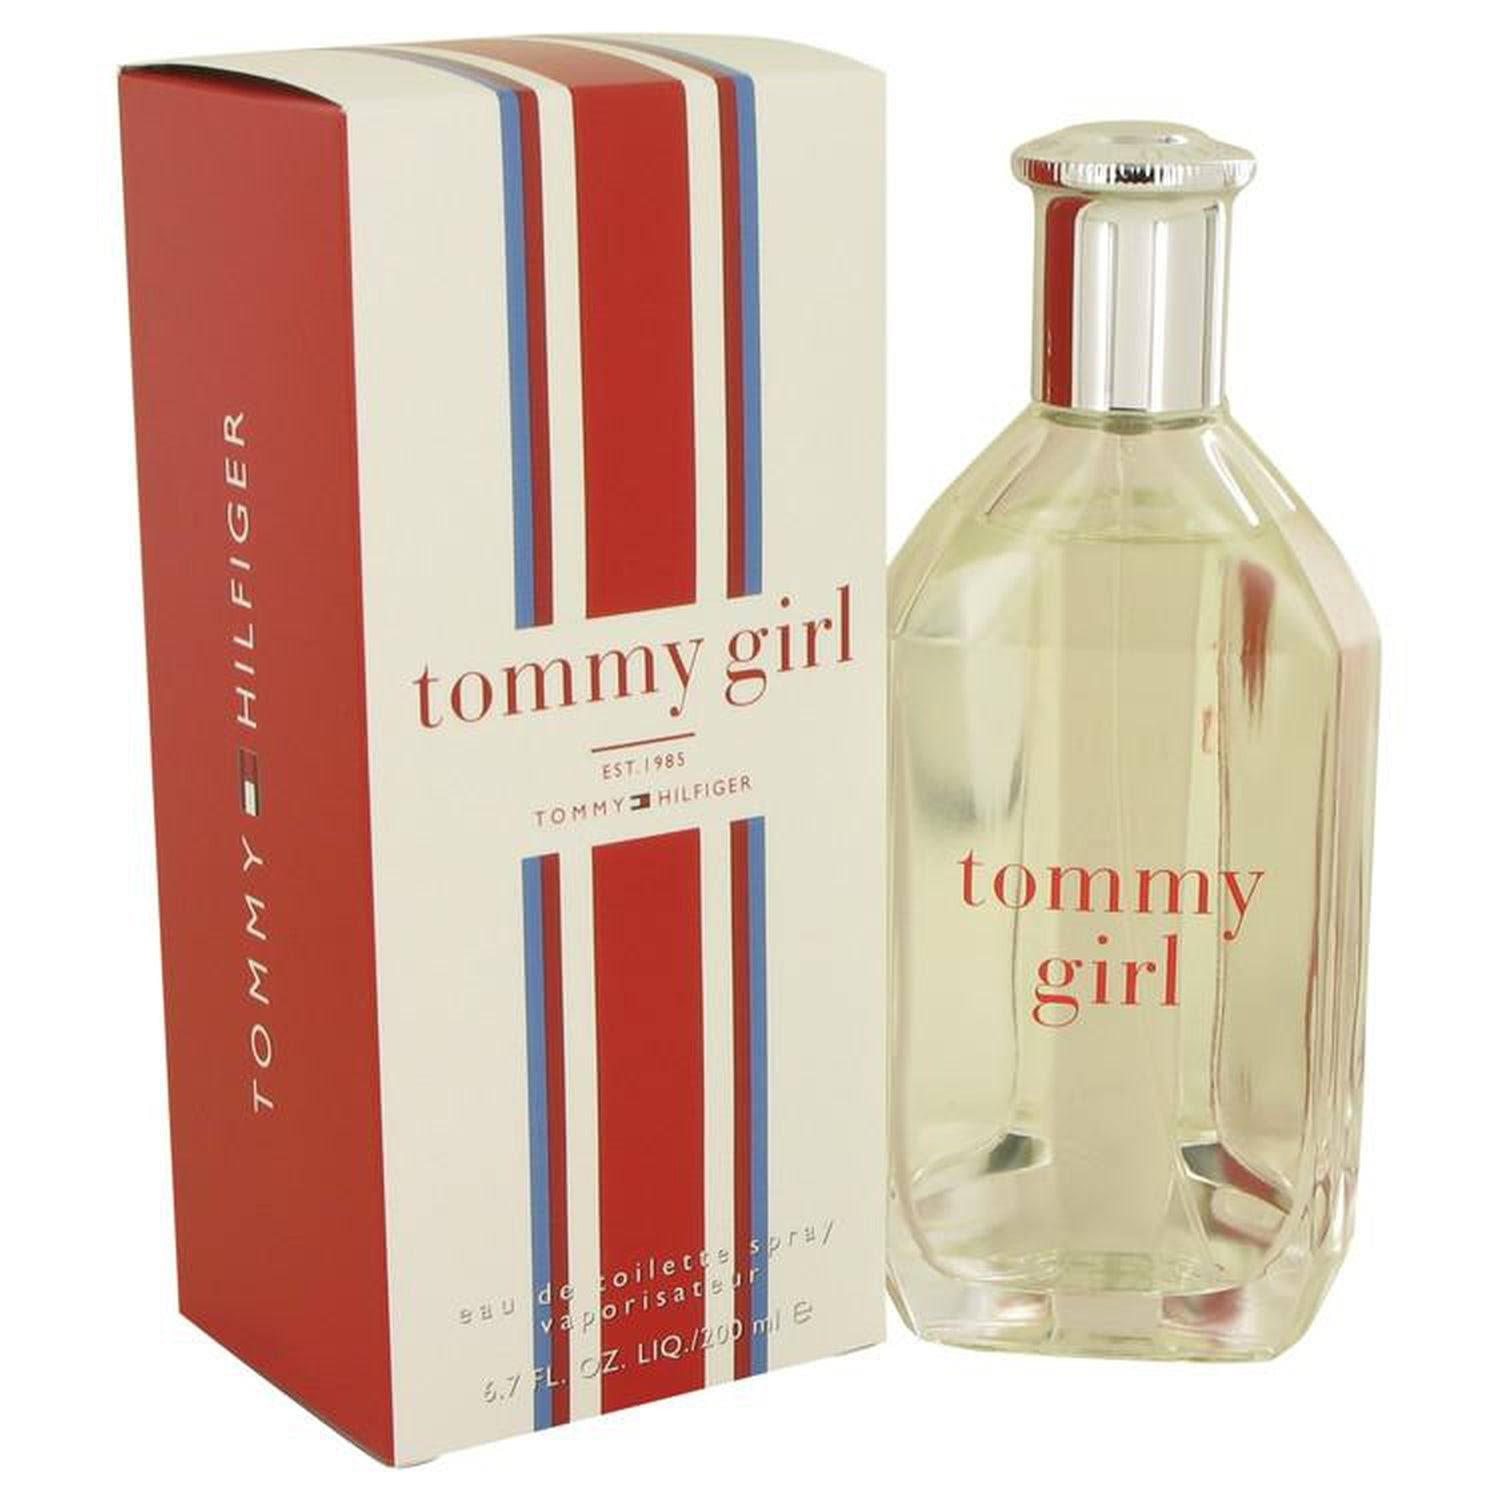 Tommy Girl by Tommy Hilfiger Eau de Toilette Spray 6.7 oz